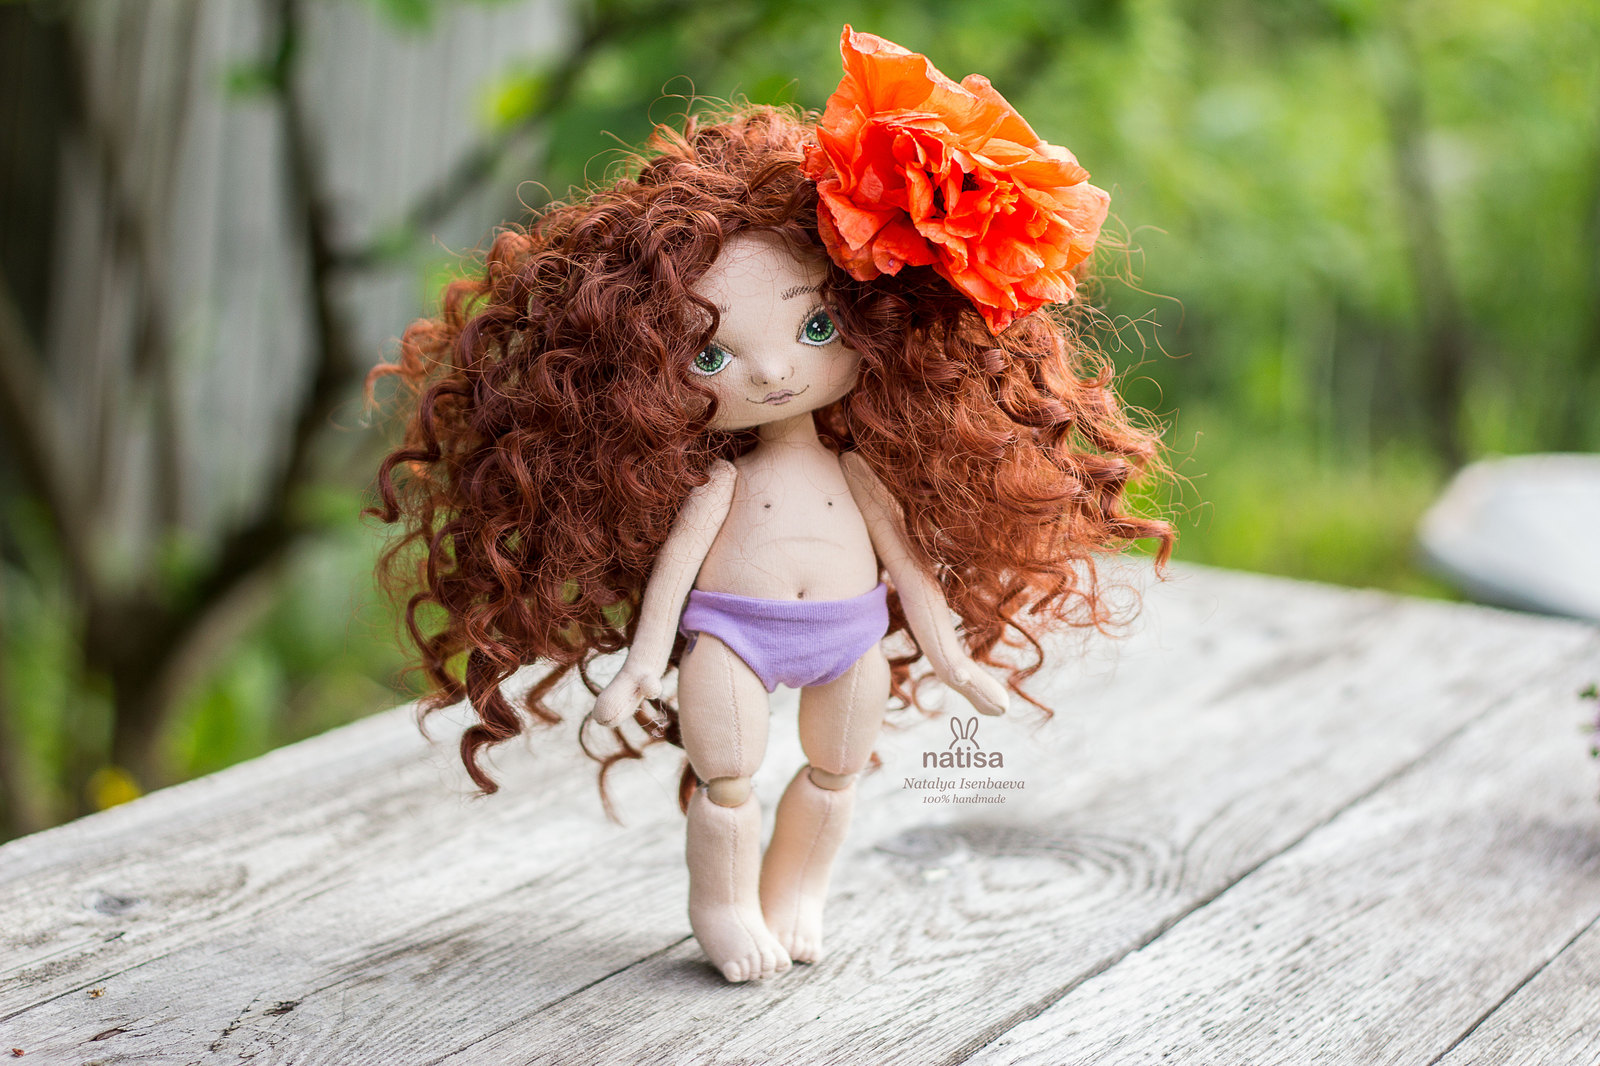 В саду кудряшка. Кукла с кудряшками. Рыжая кудрявая кукла. Кукла с кудрявыми волосами. Кукла с кучерявыми волосами.